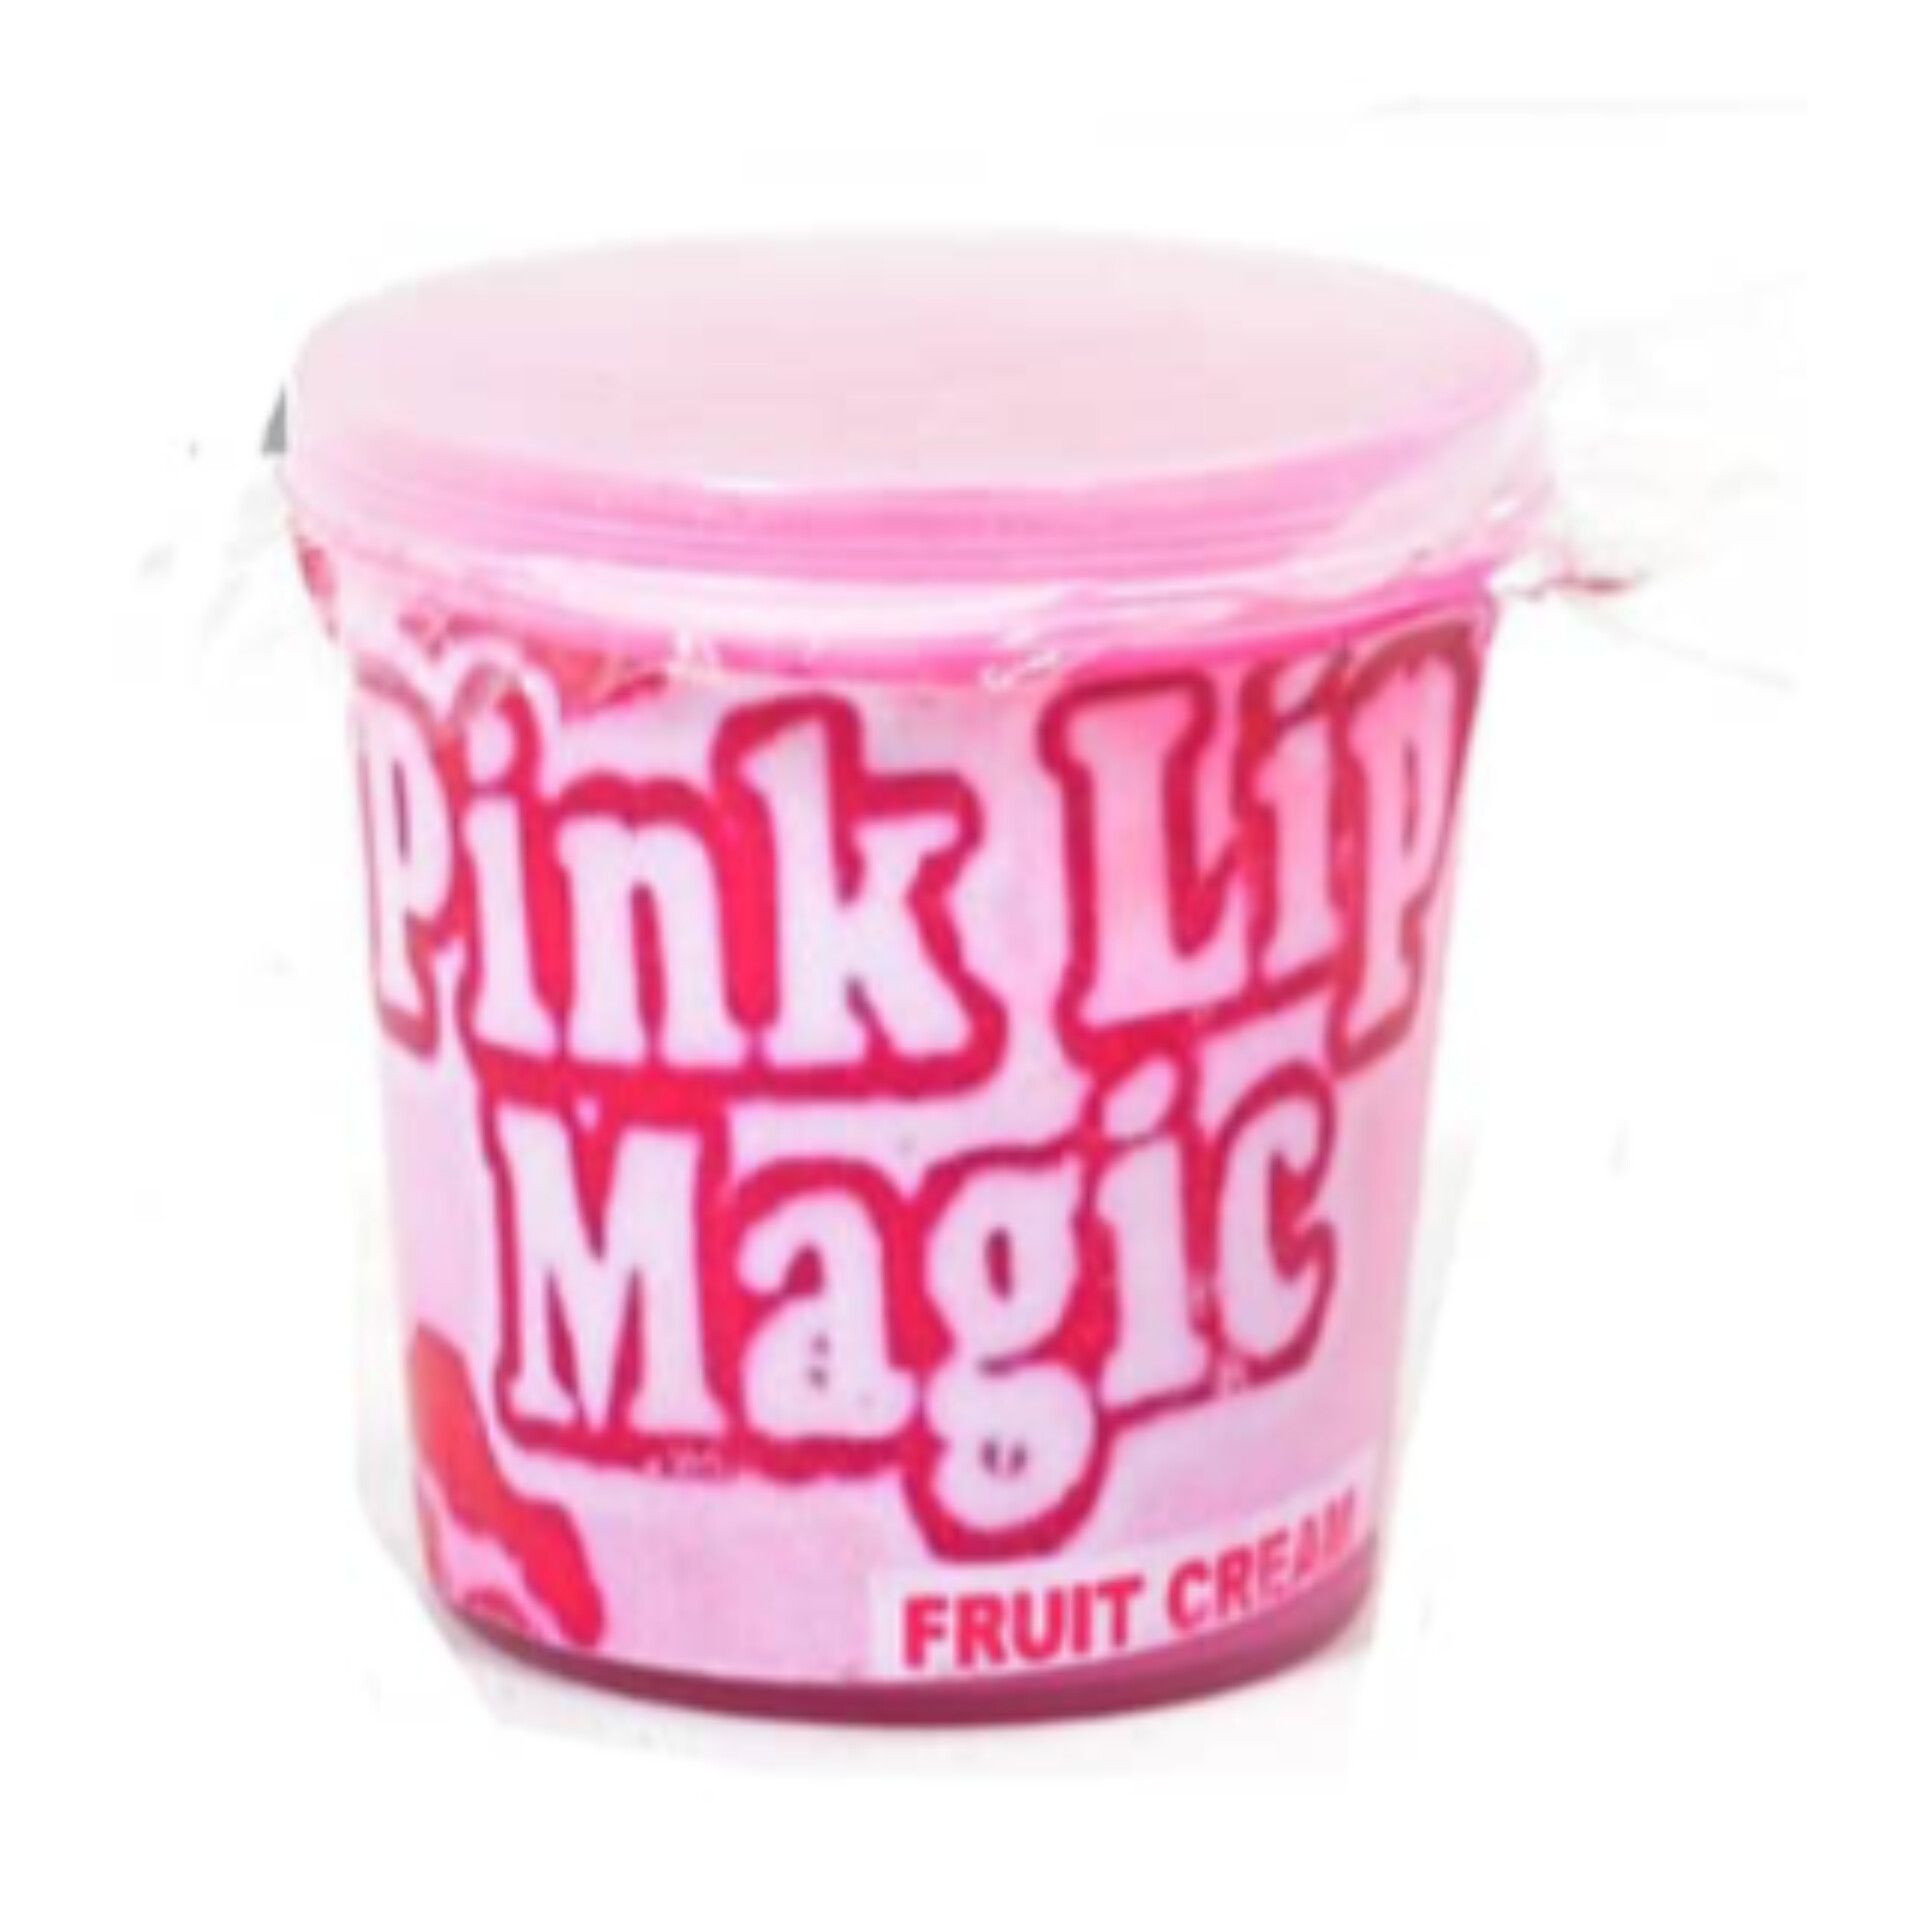 Pink lips magic cream, Health and Wellness